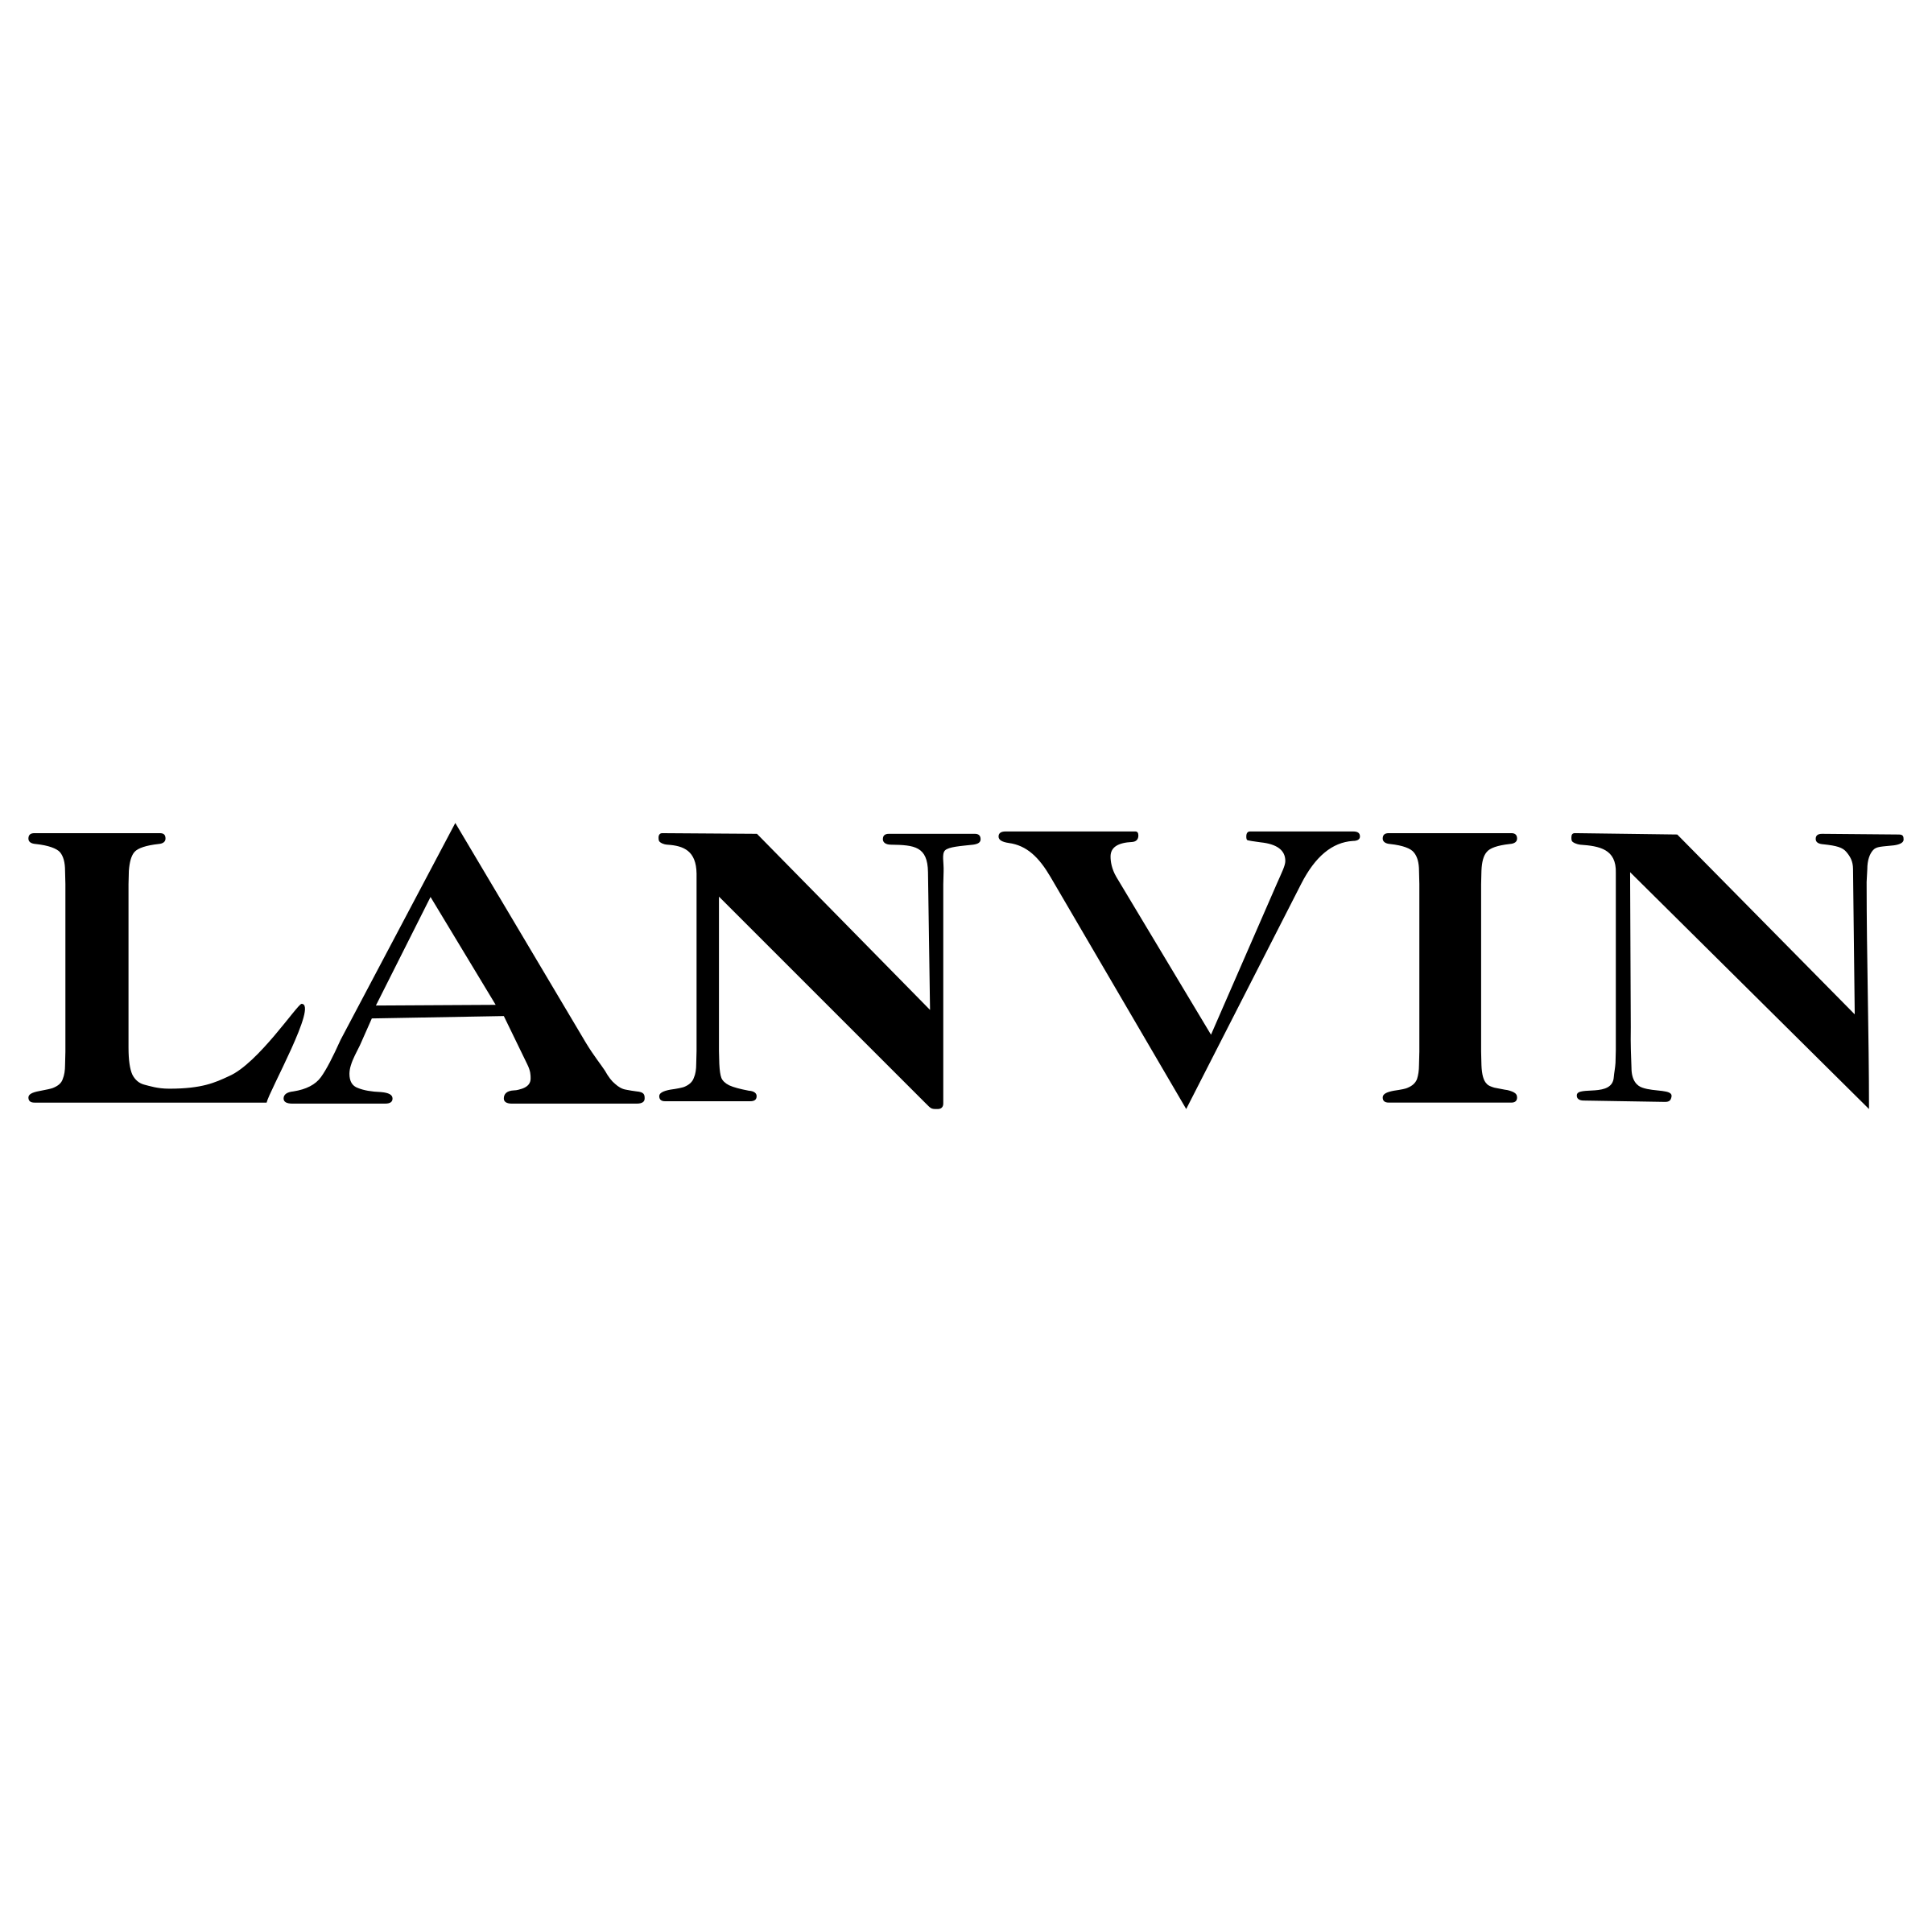 Lanvin Logo Marques Et Logos Histoire Et Signification Png Images And